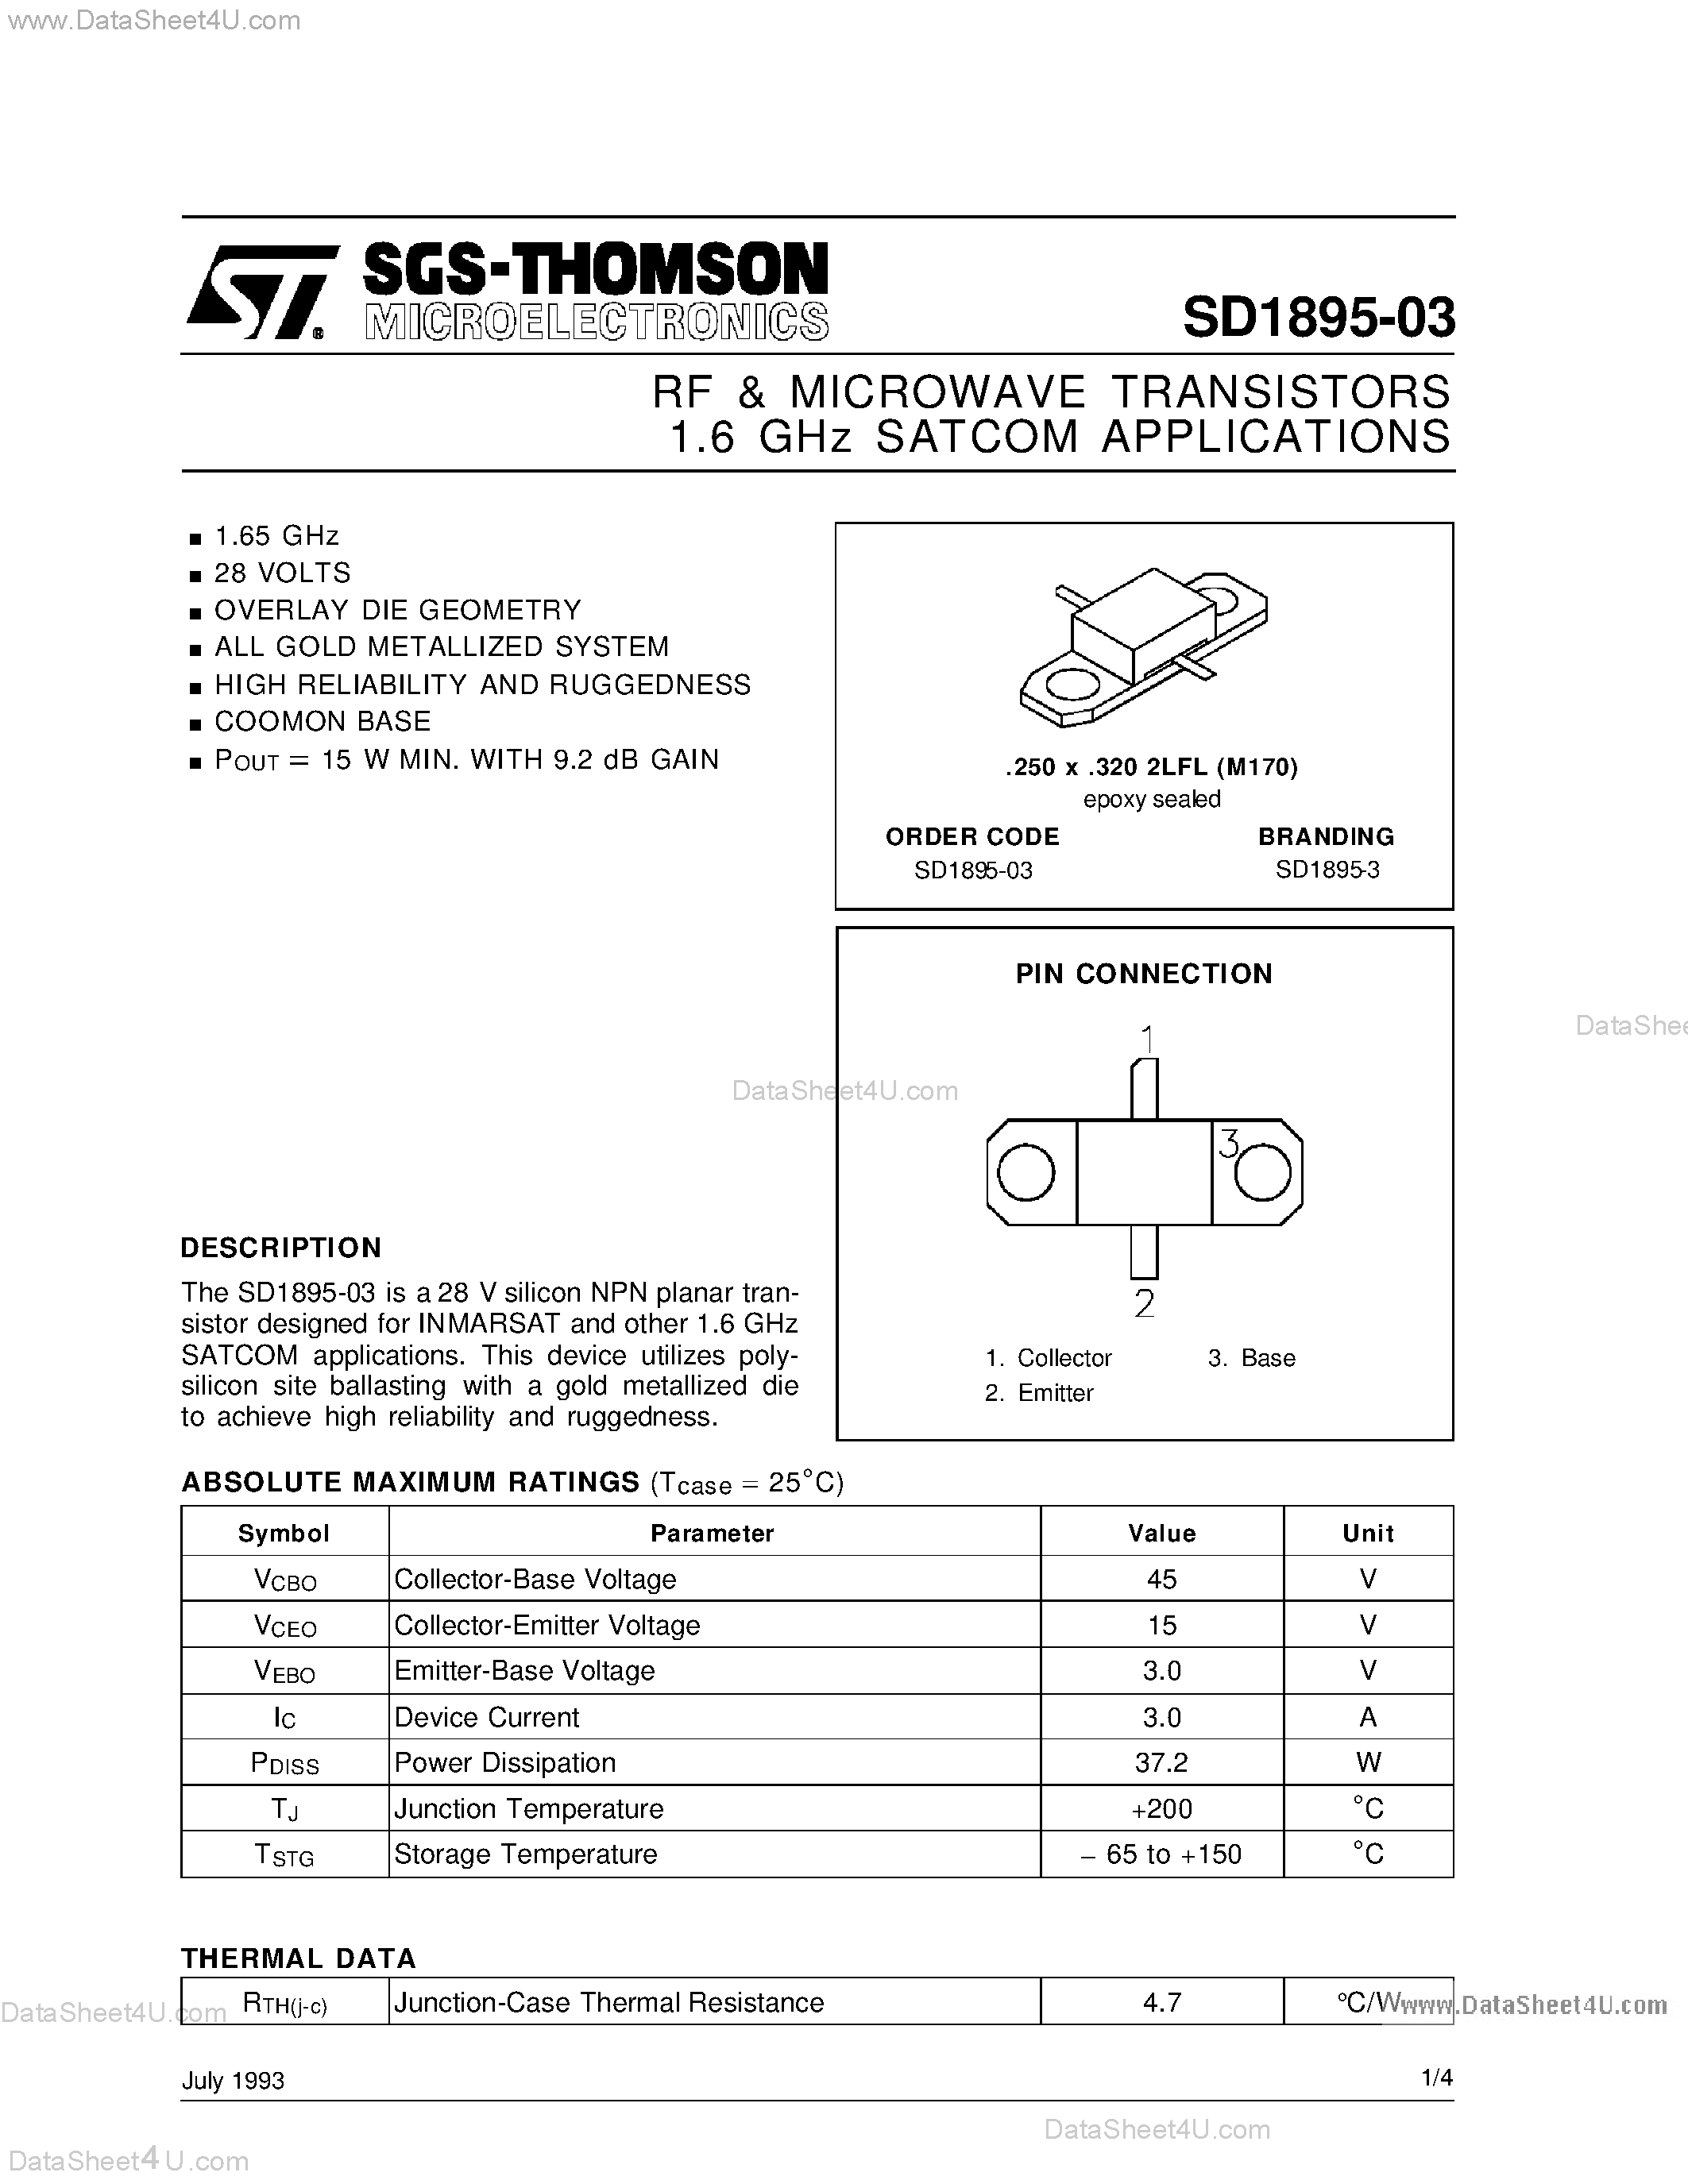 Datasheet SD1895-03 - RF & MICROWAVE TRANSISTORS 1.6 GHz SATCOM APPLICATIONS page 1